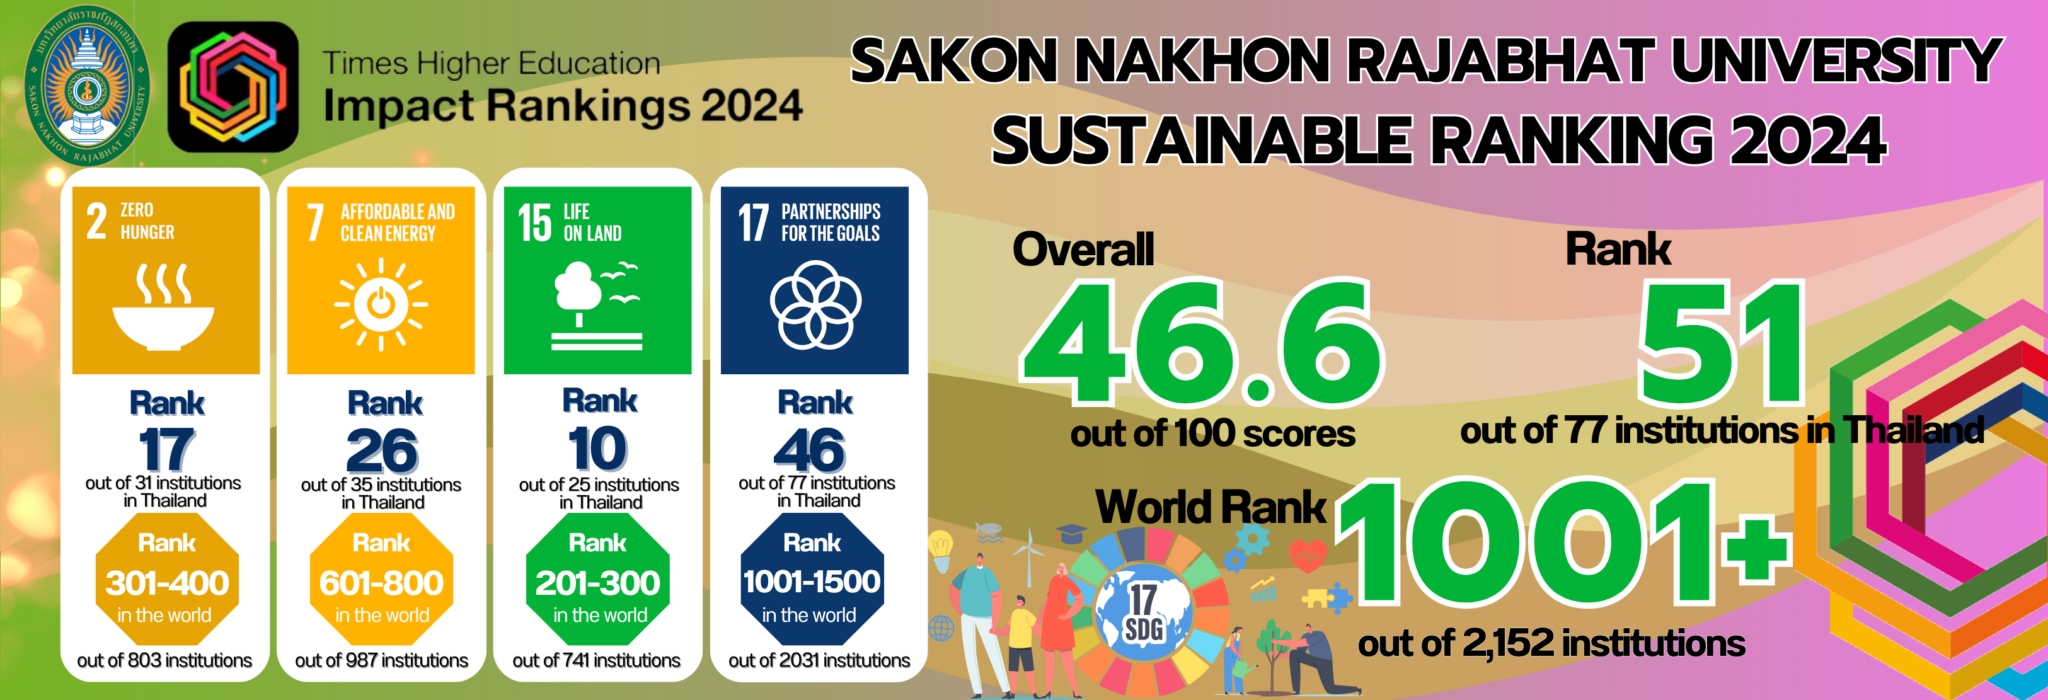 Sakon Nakhon Rajabhat University has participated in the Times Higher Education Impact Rankings 2024